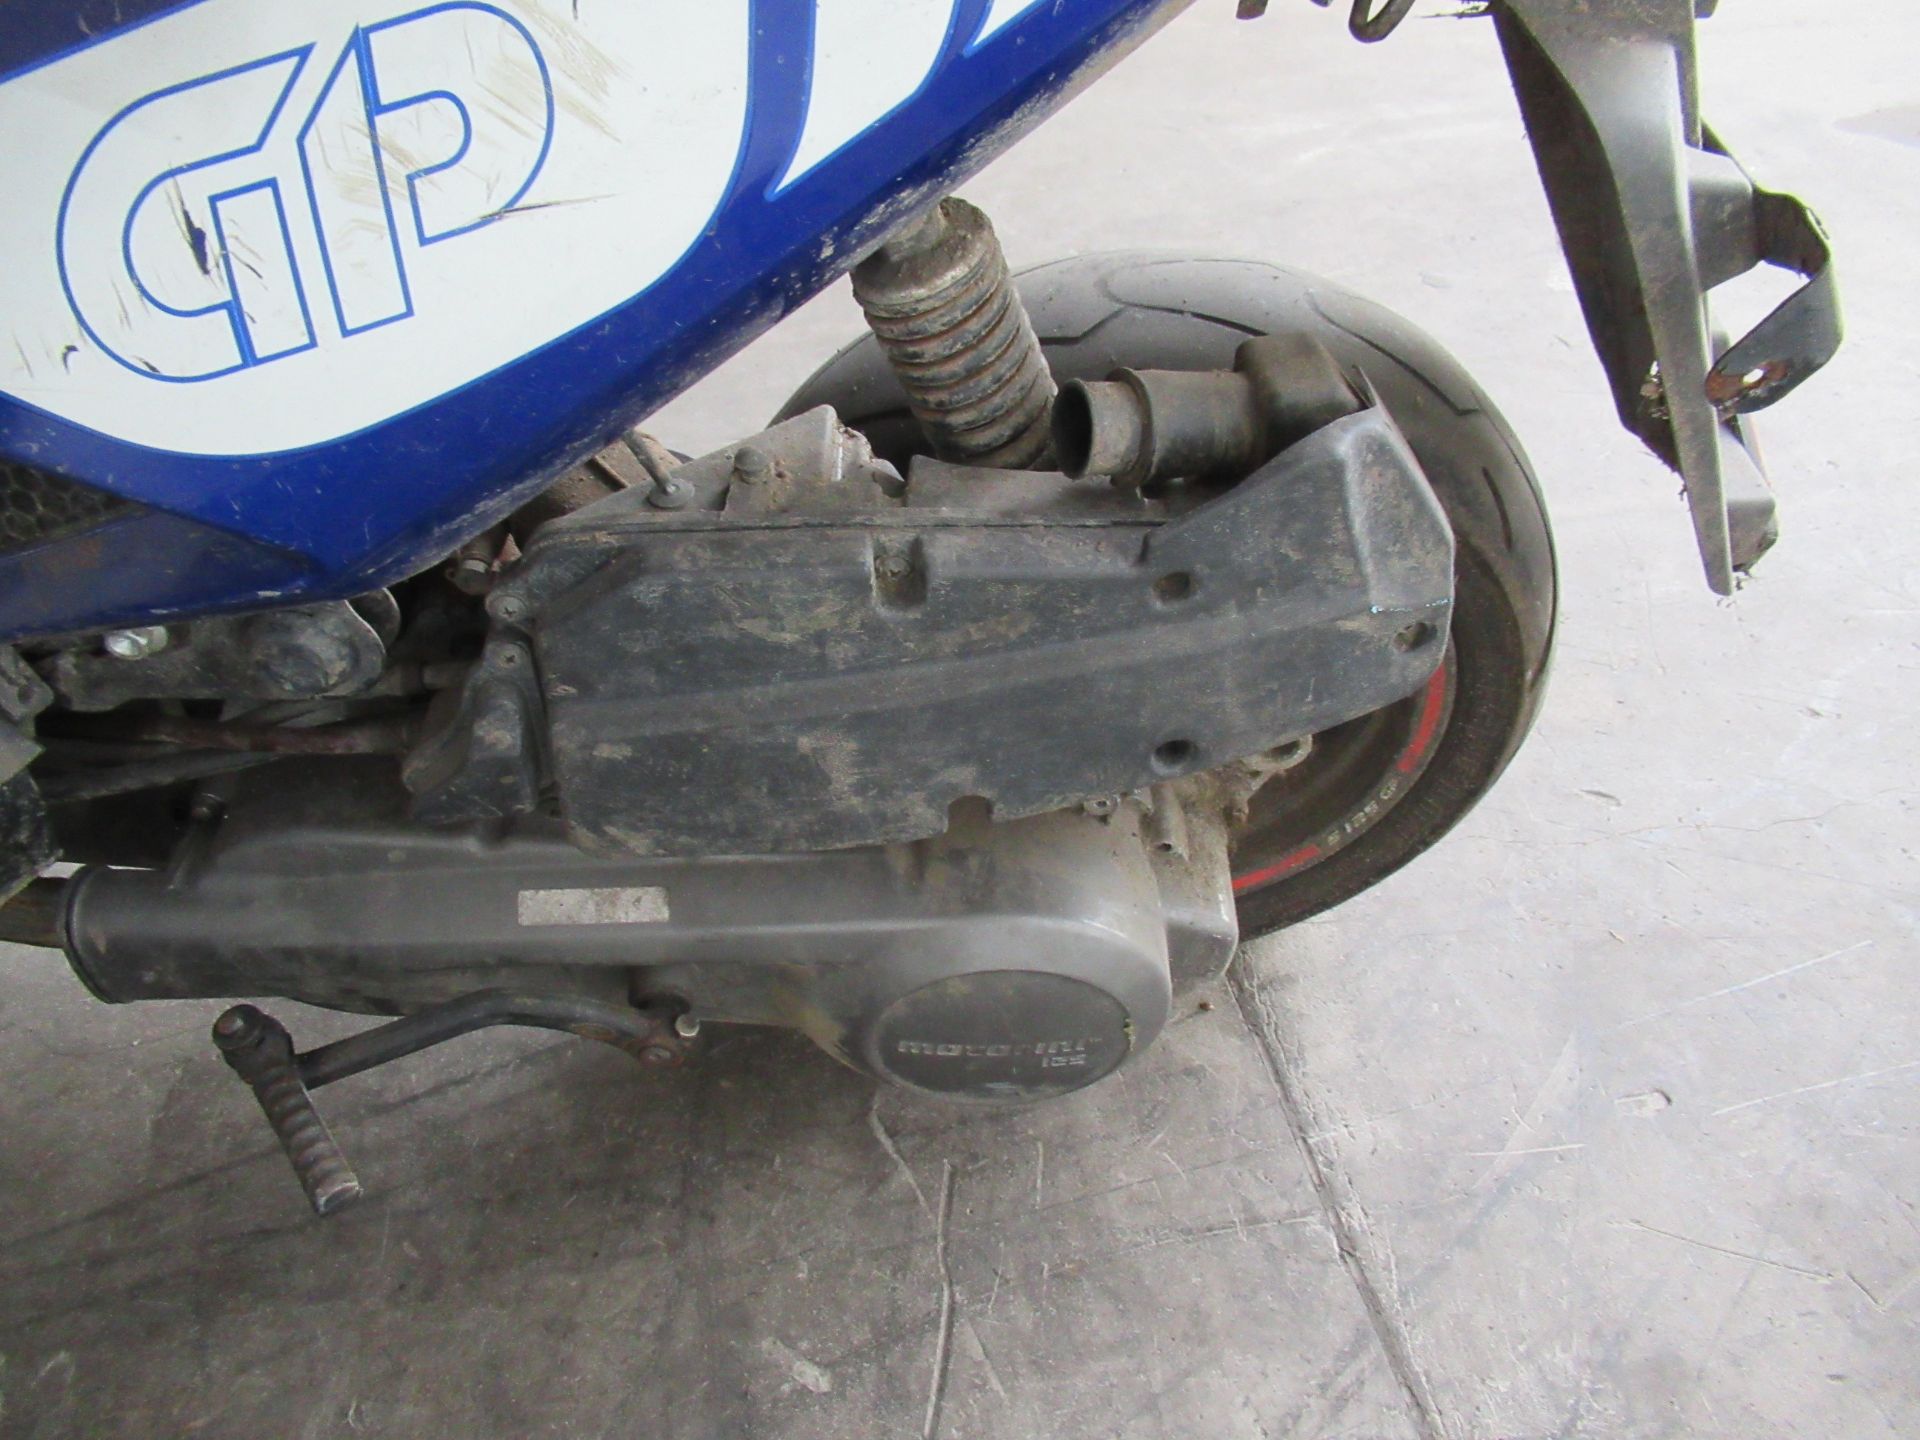 3x Motorini GP125i motorbikes - Image 28 of 30